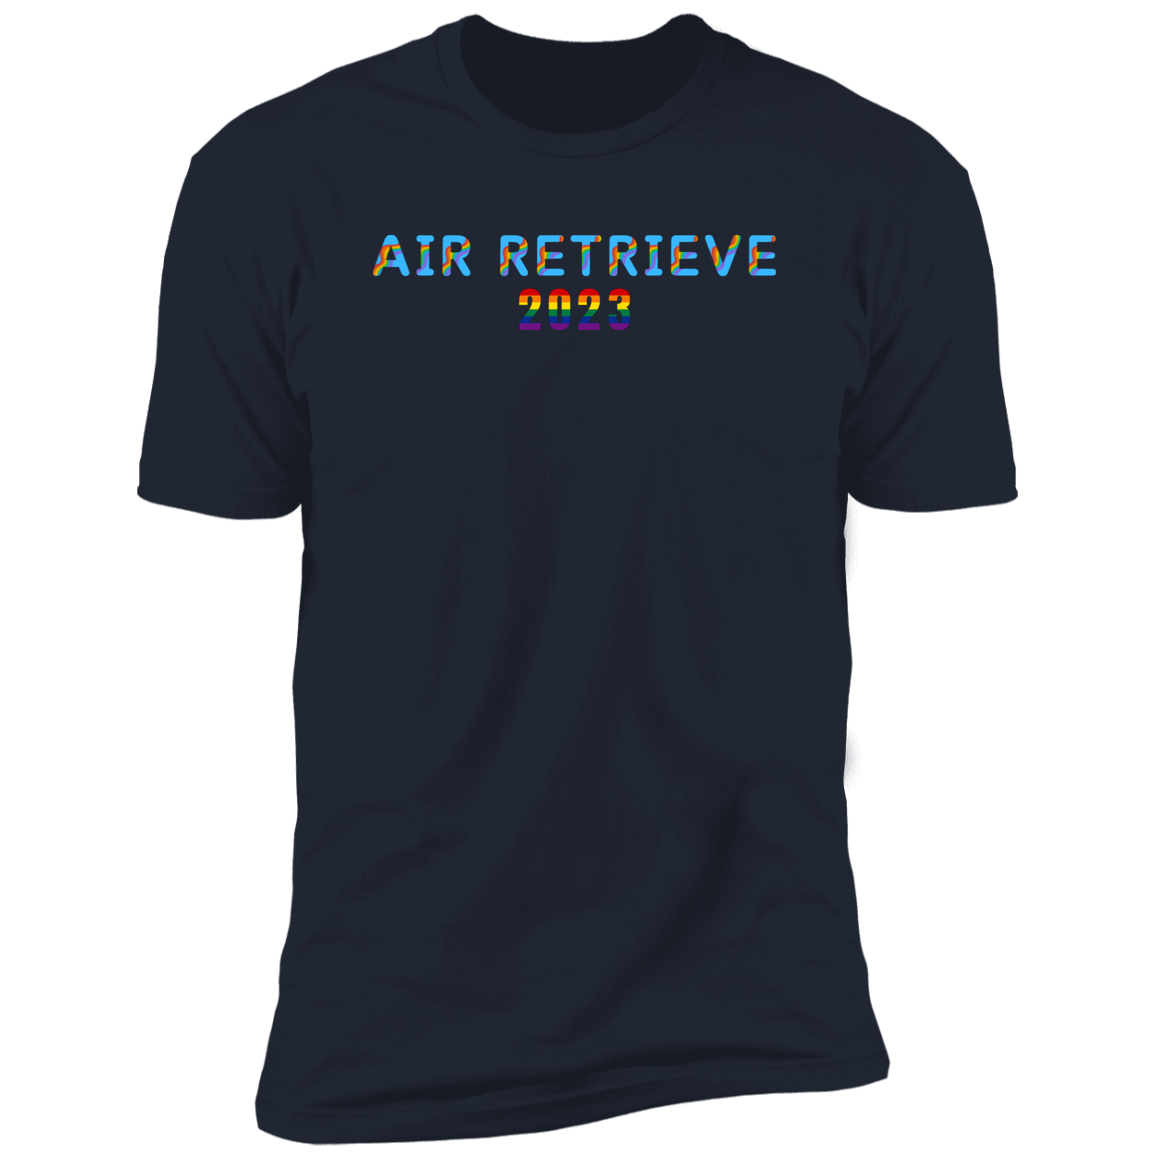 Air Retrieve 2023 Pride Dock diving t-shirt, dog pride air retrieve dock diving shirt for humans, in navy blue